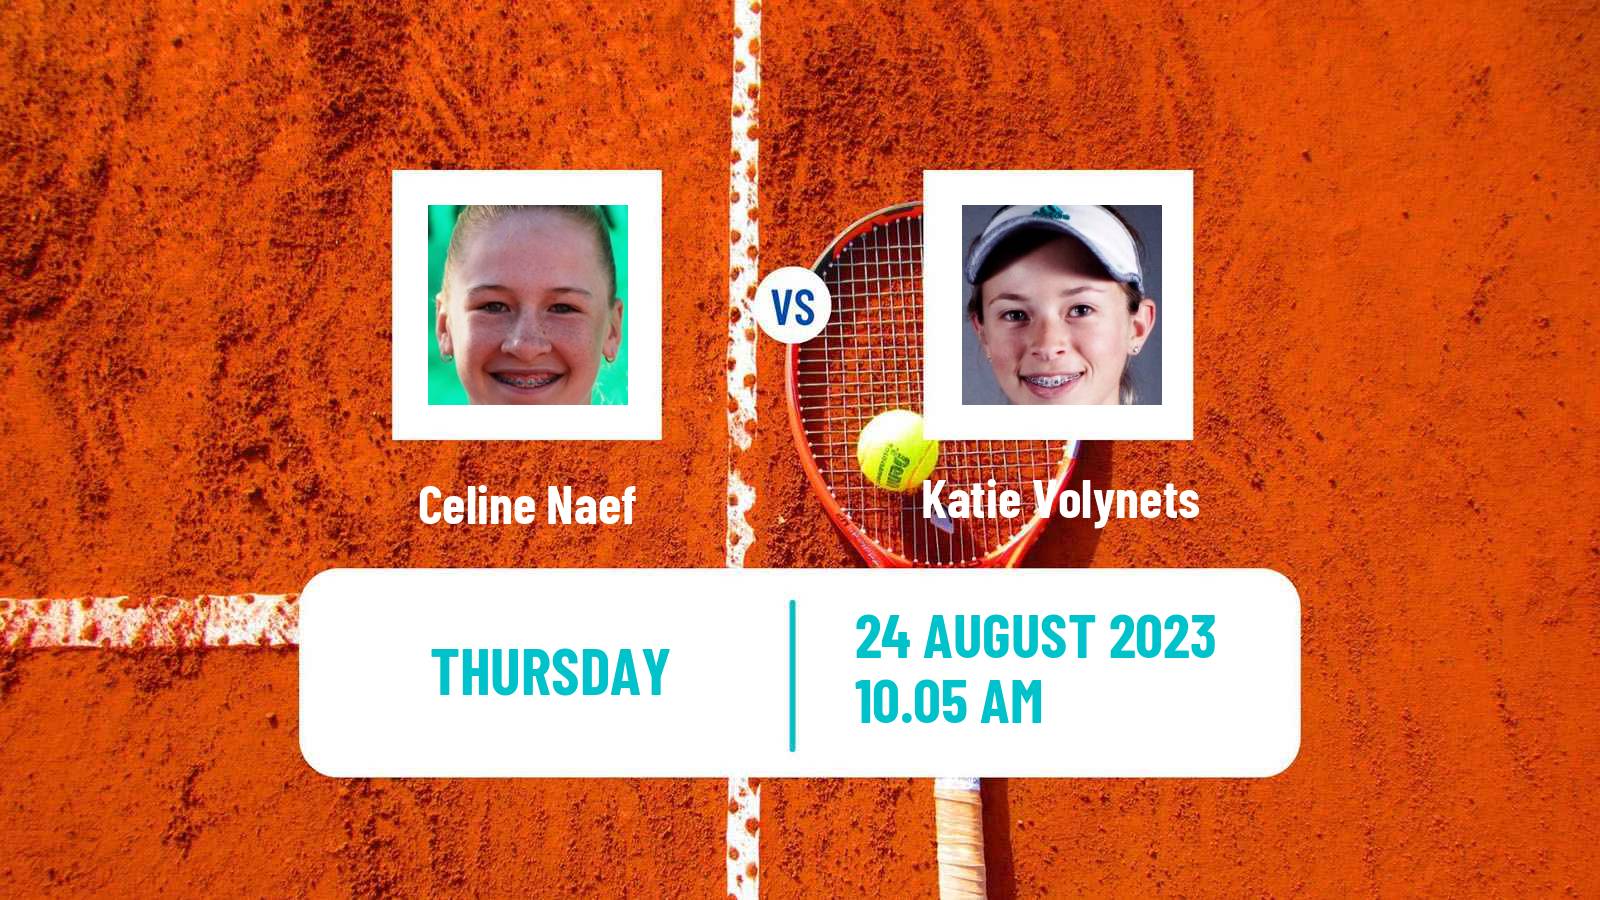 Tennis WTA US Open Celine Naef - Katie Volynets